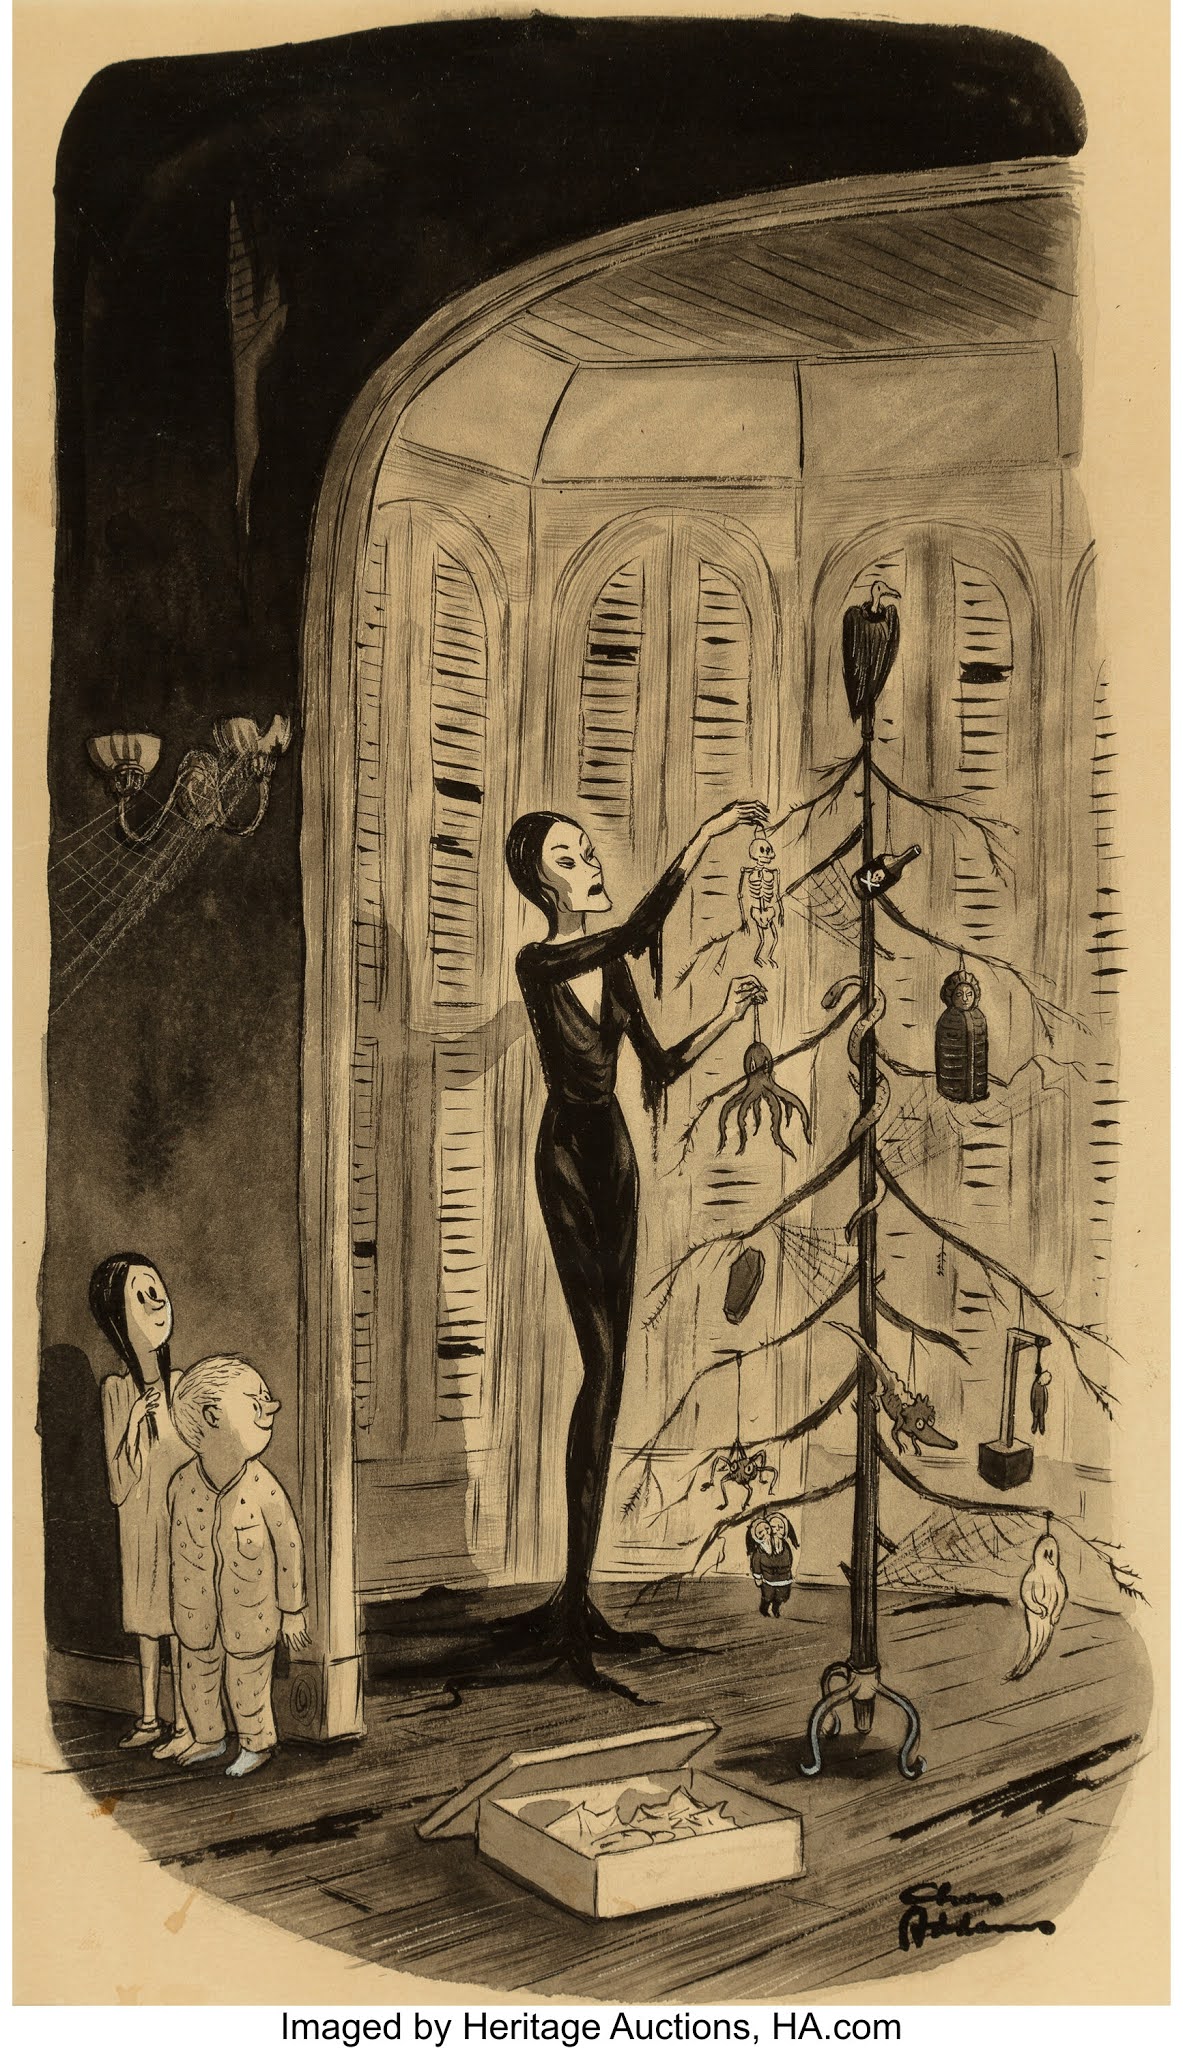 Charles Addams New Yorker Cartoons